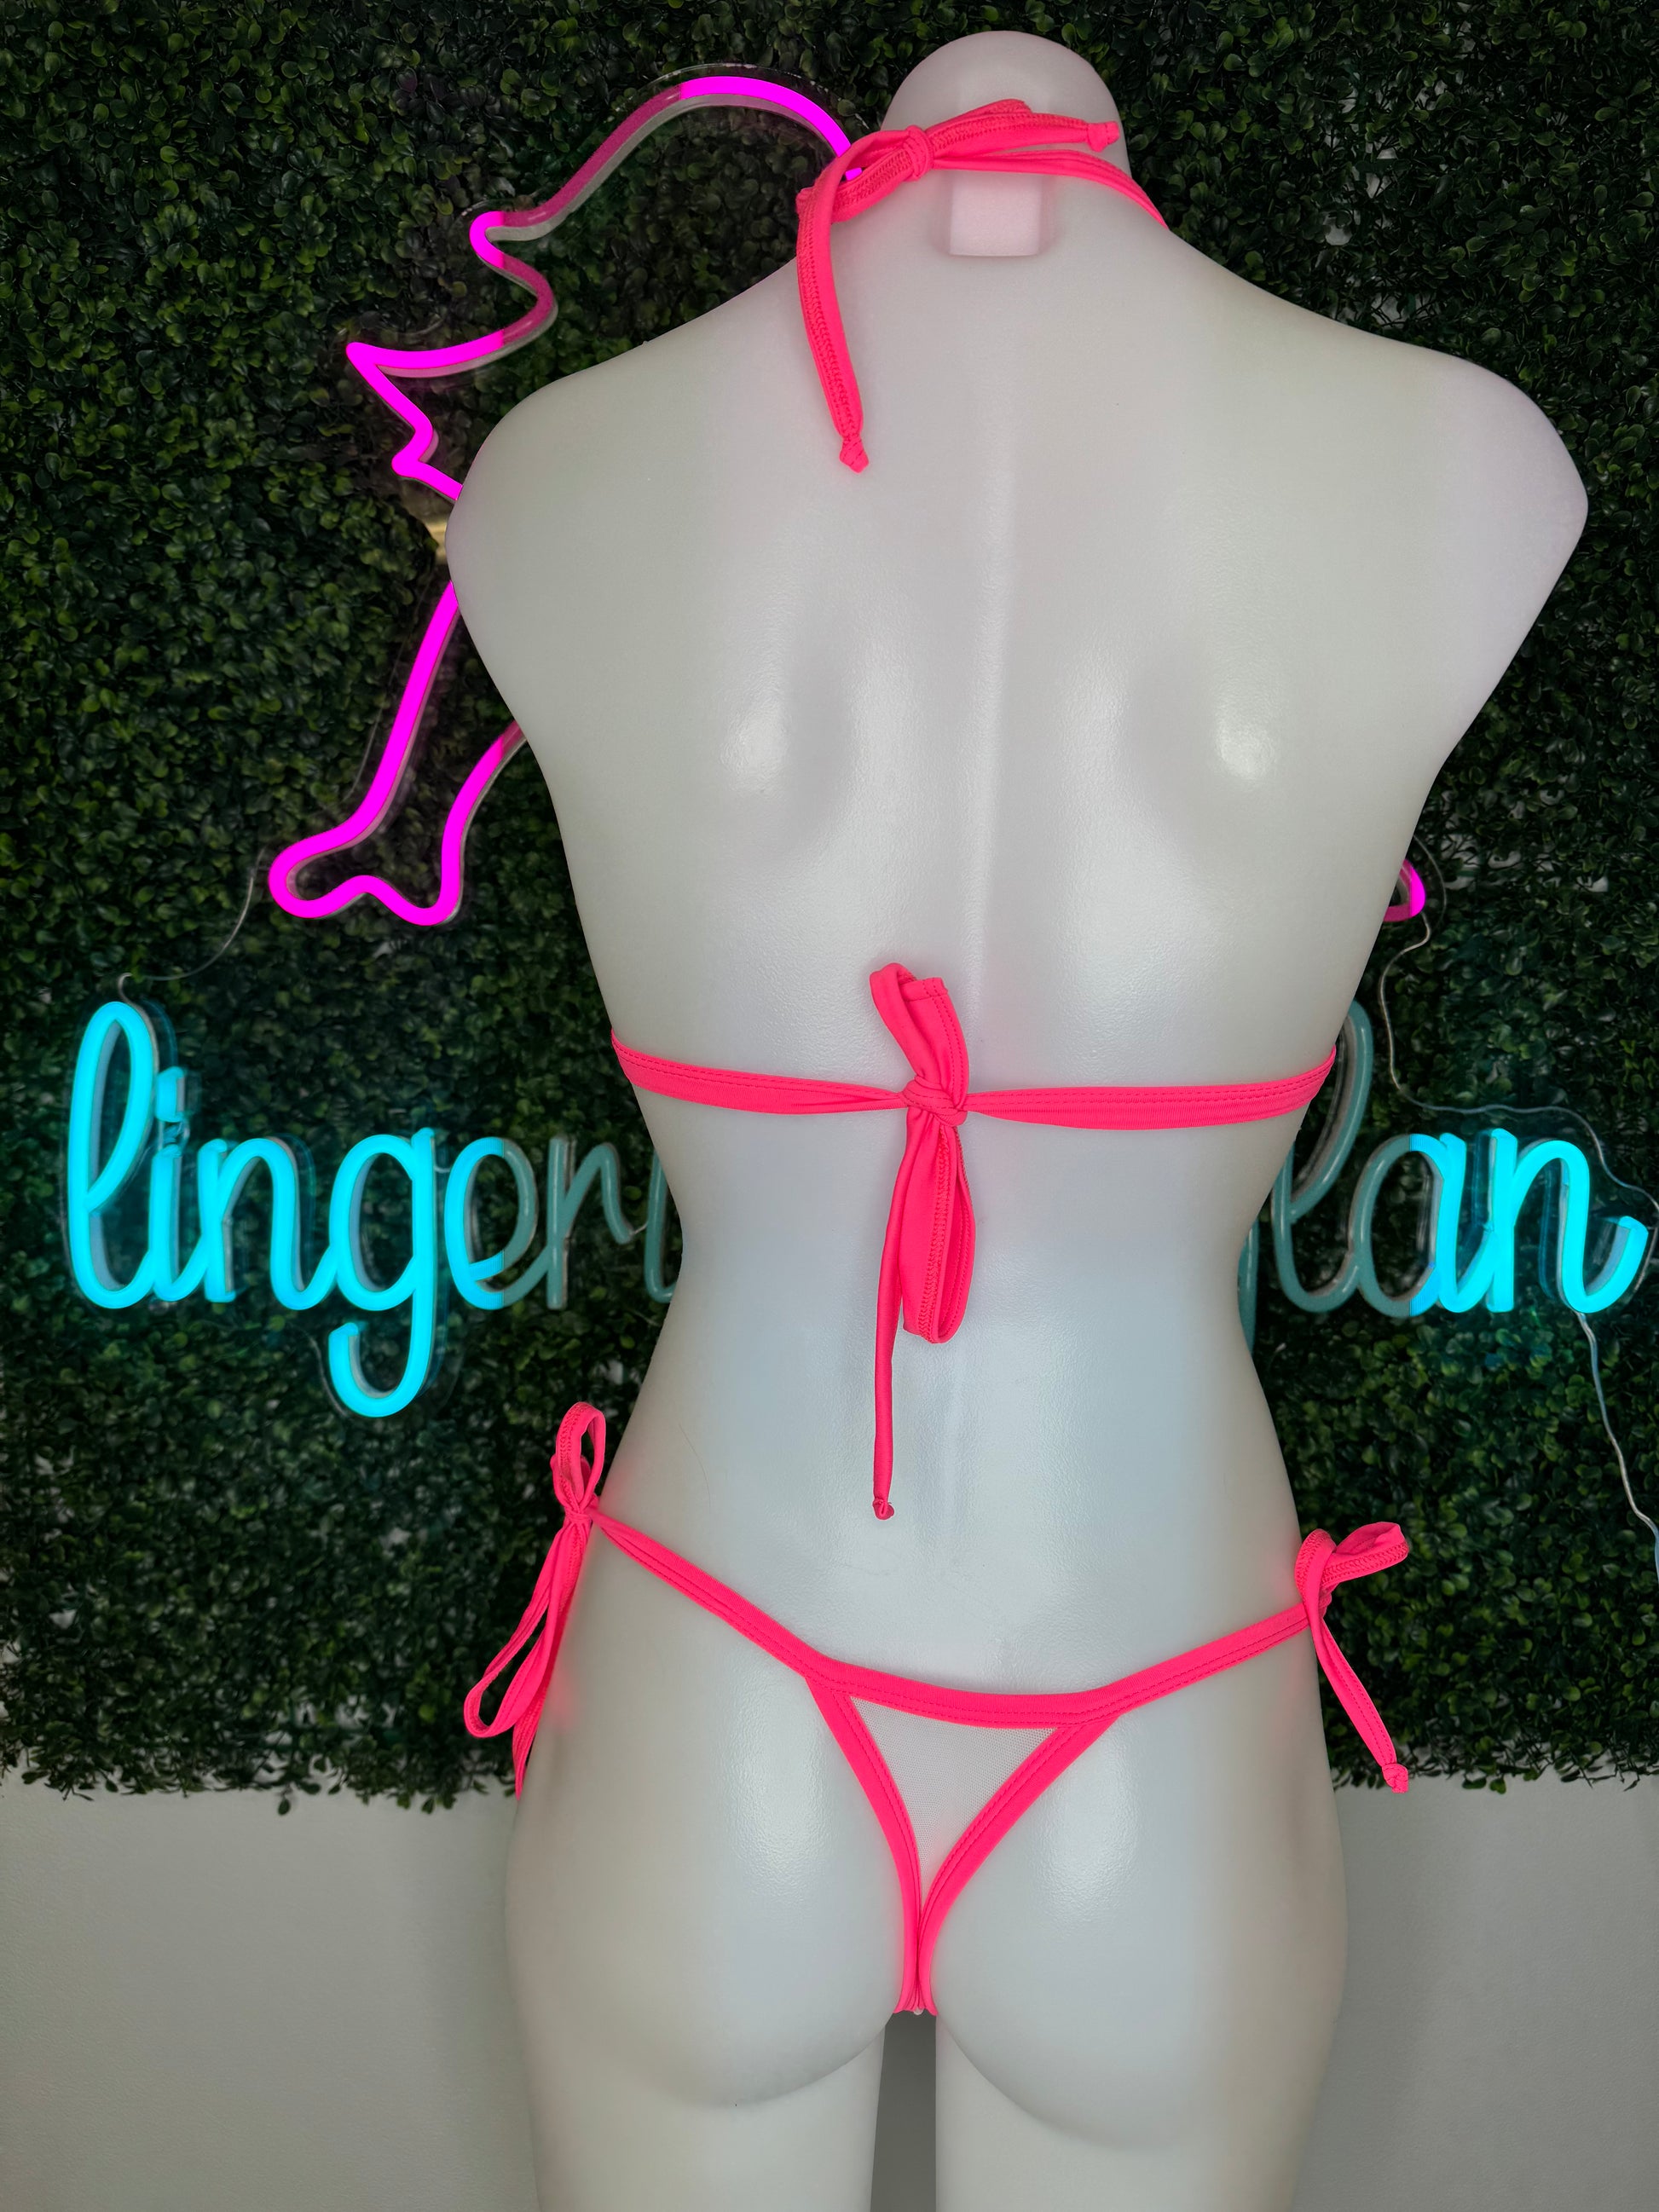 heart latex bikini two-piece stripper outfit